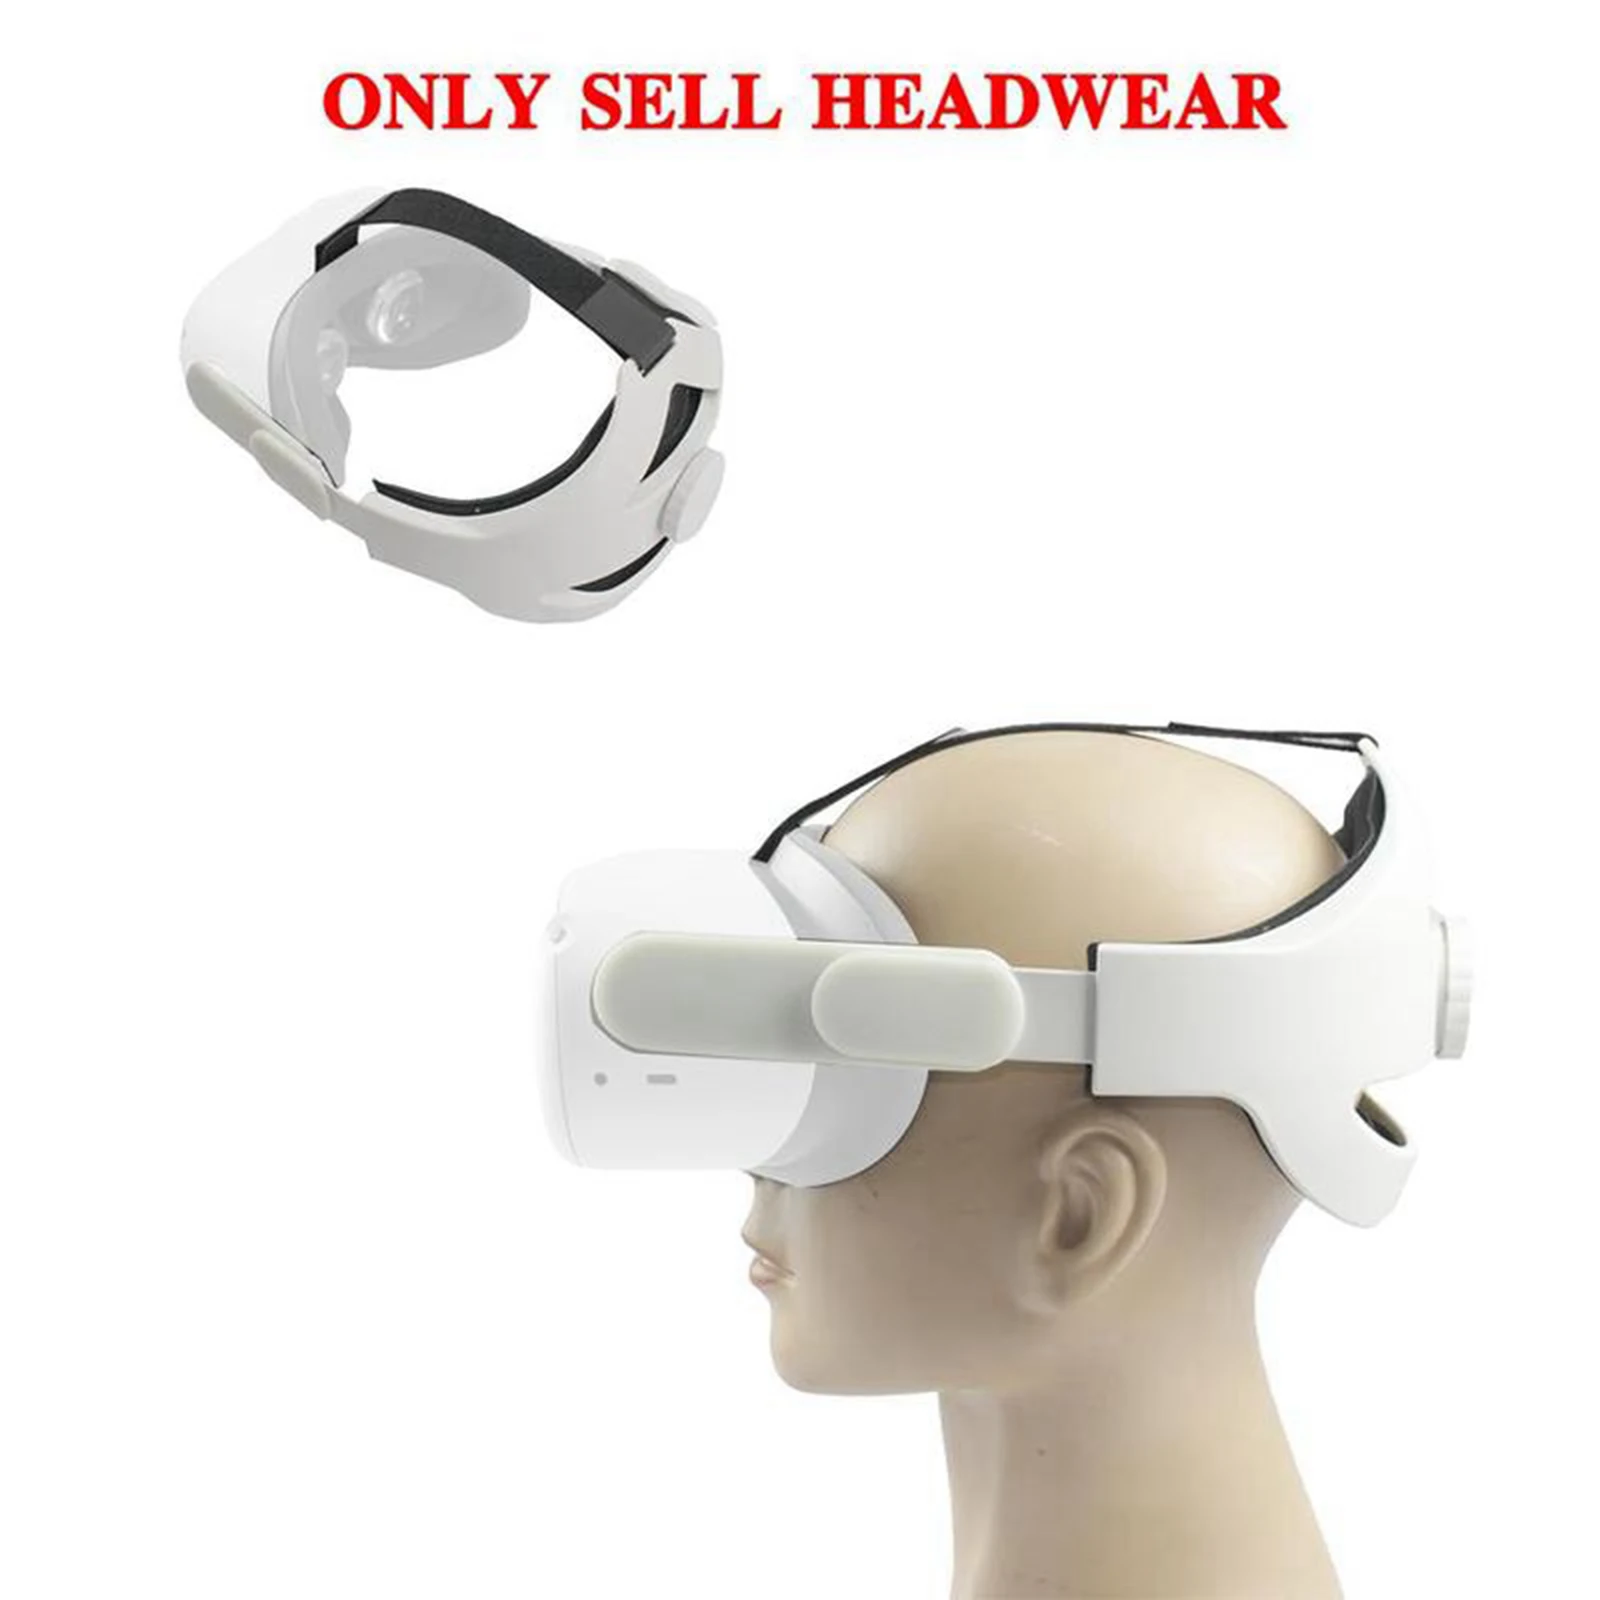 Adjustable for  Quest 2 Head Strap VR Elite Strap,improve Comfort Reduce Head Pressure Virtual Reality Accessories